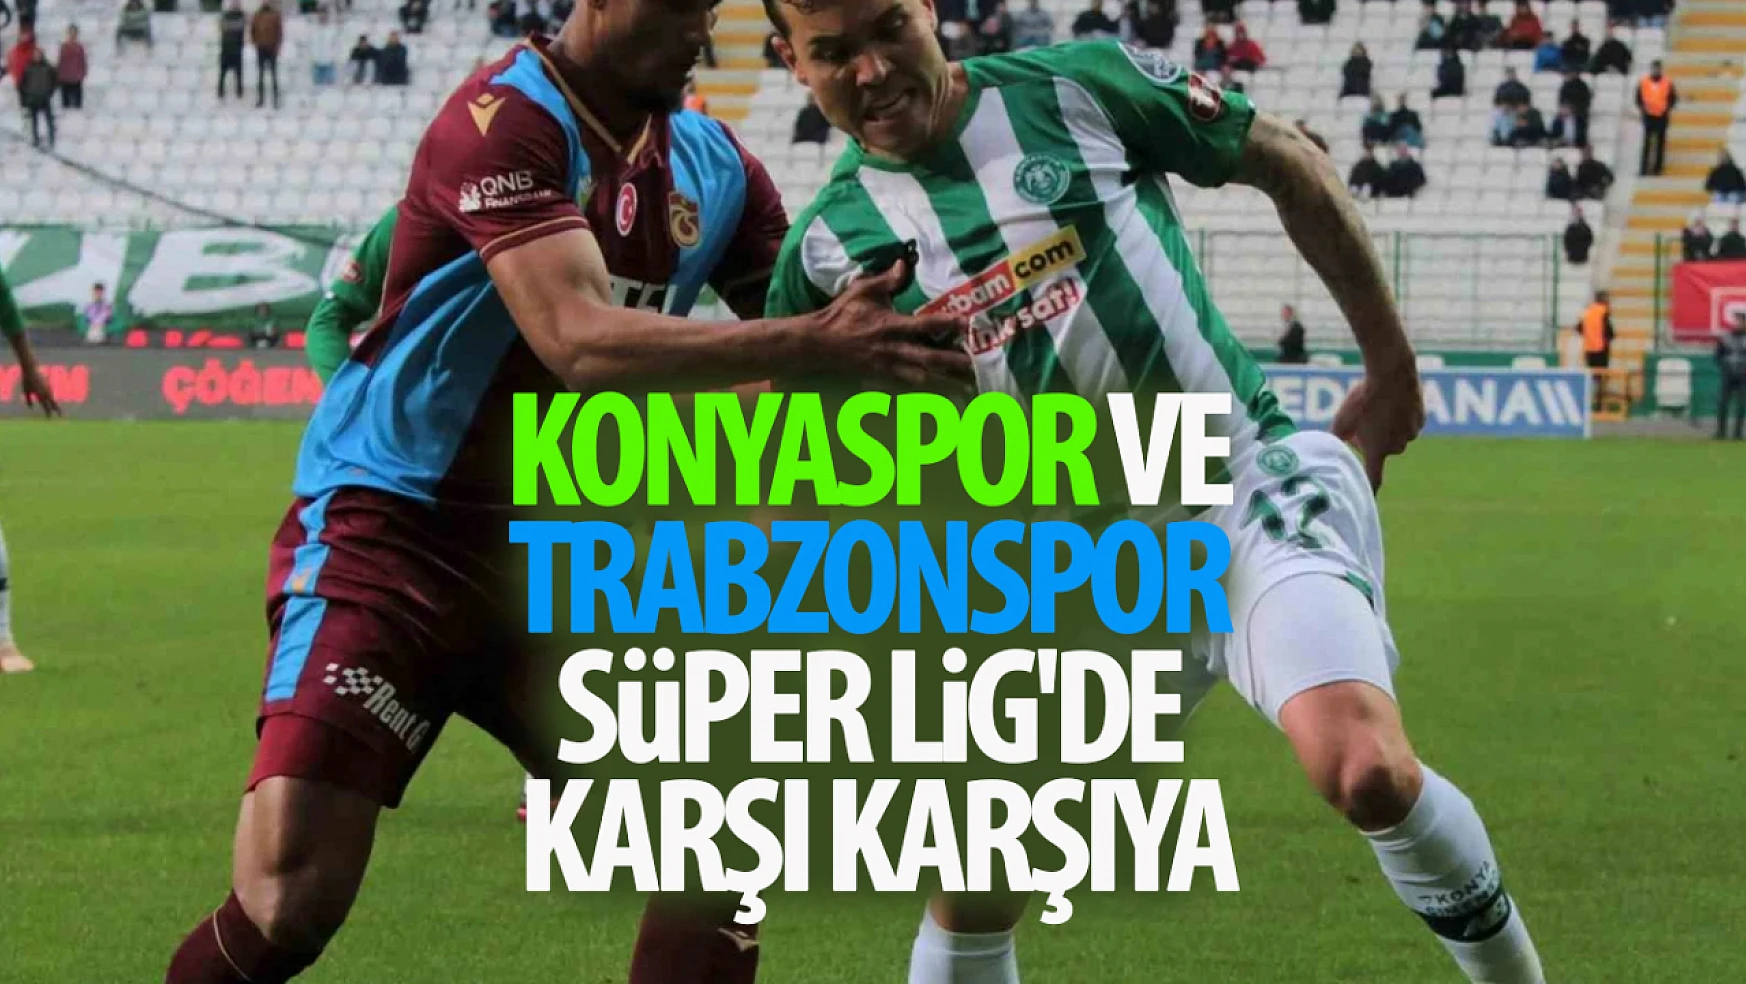 Konyaspor ve Trabzonspor Süper Lig'de Karşı Karşıya!